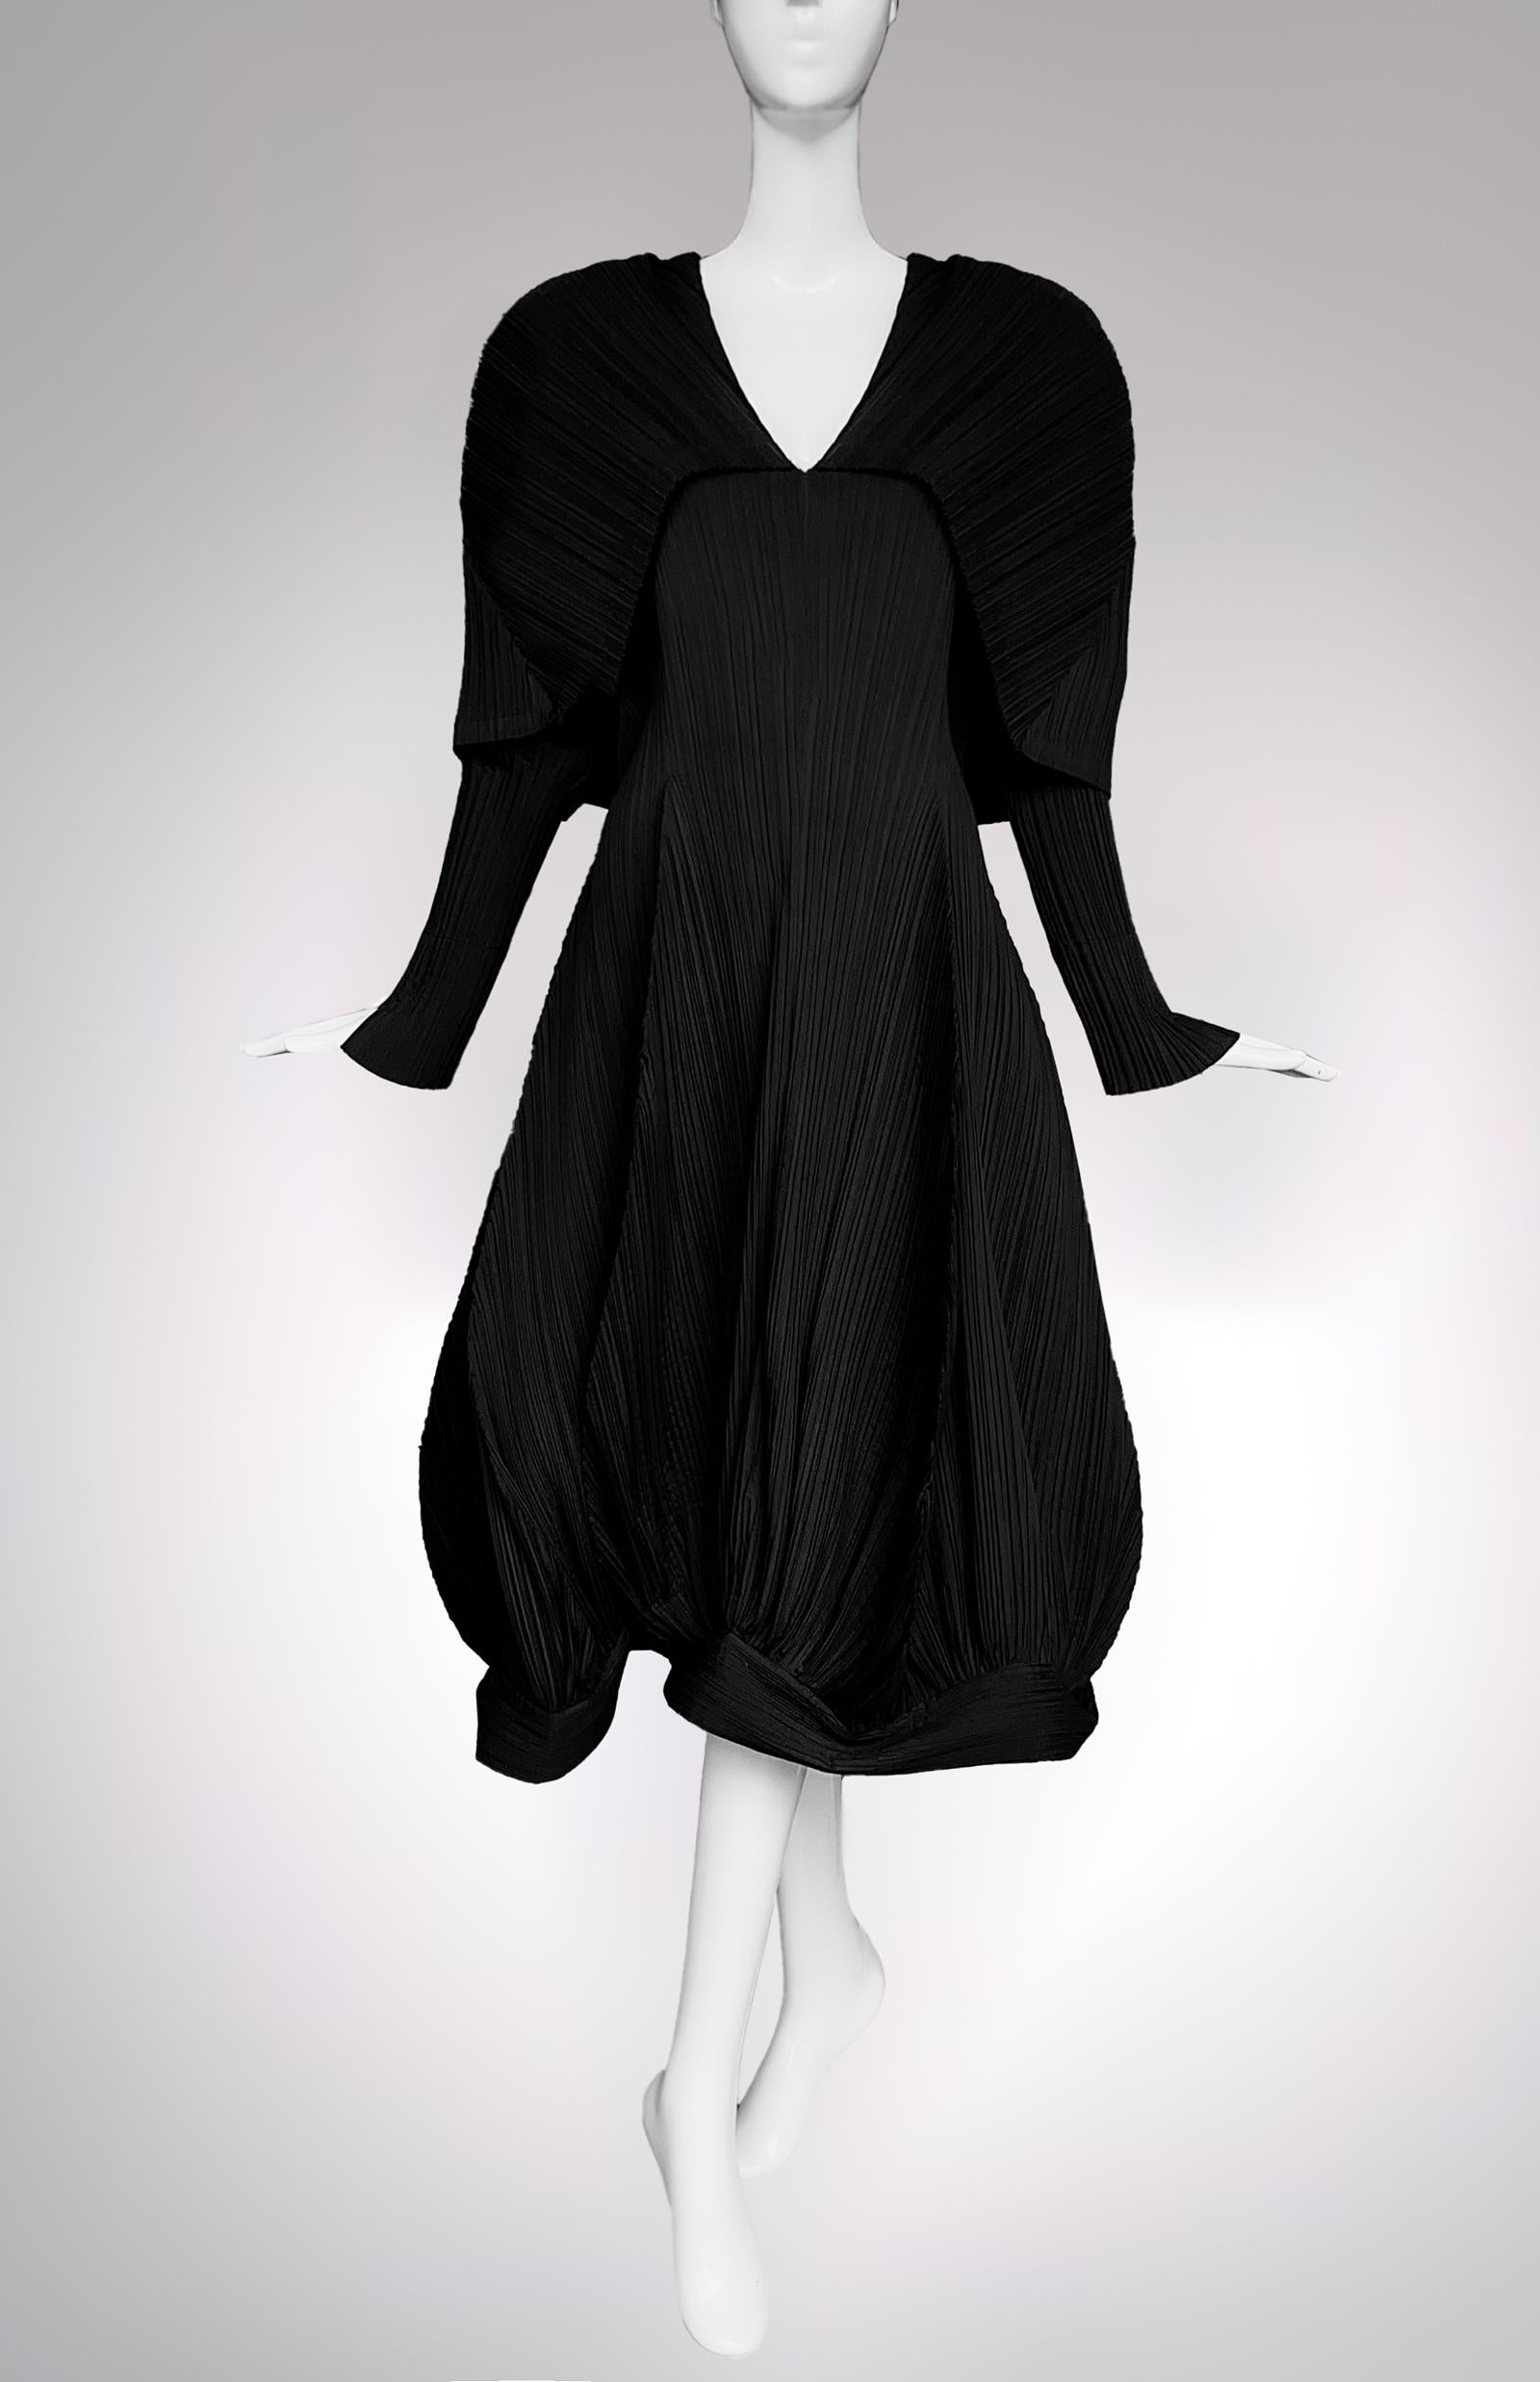 Iconic ISSEY MIYAKE Tulip Dress Black Sculptural Editorial Dramatic 1